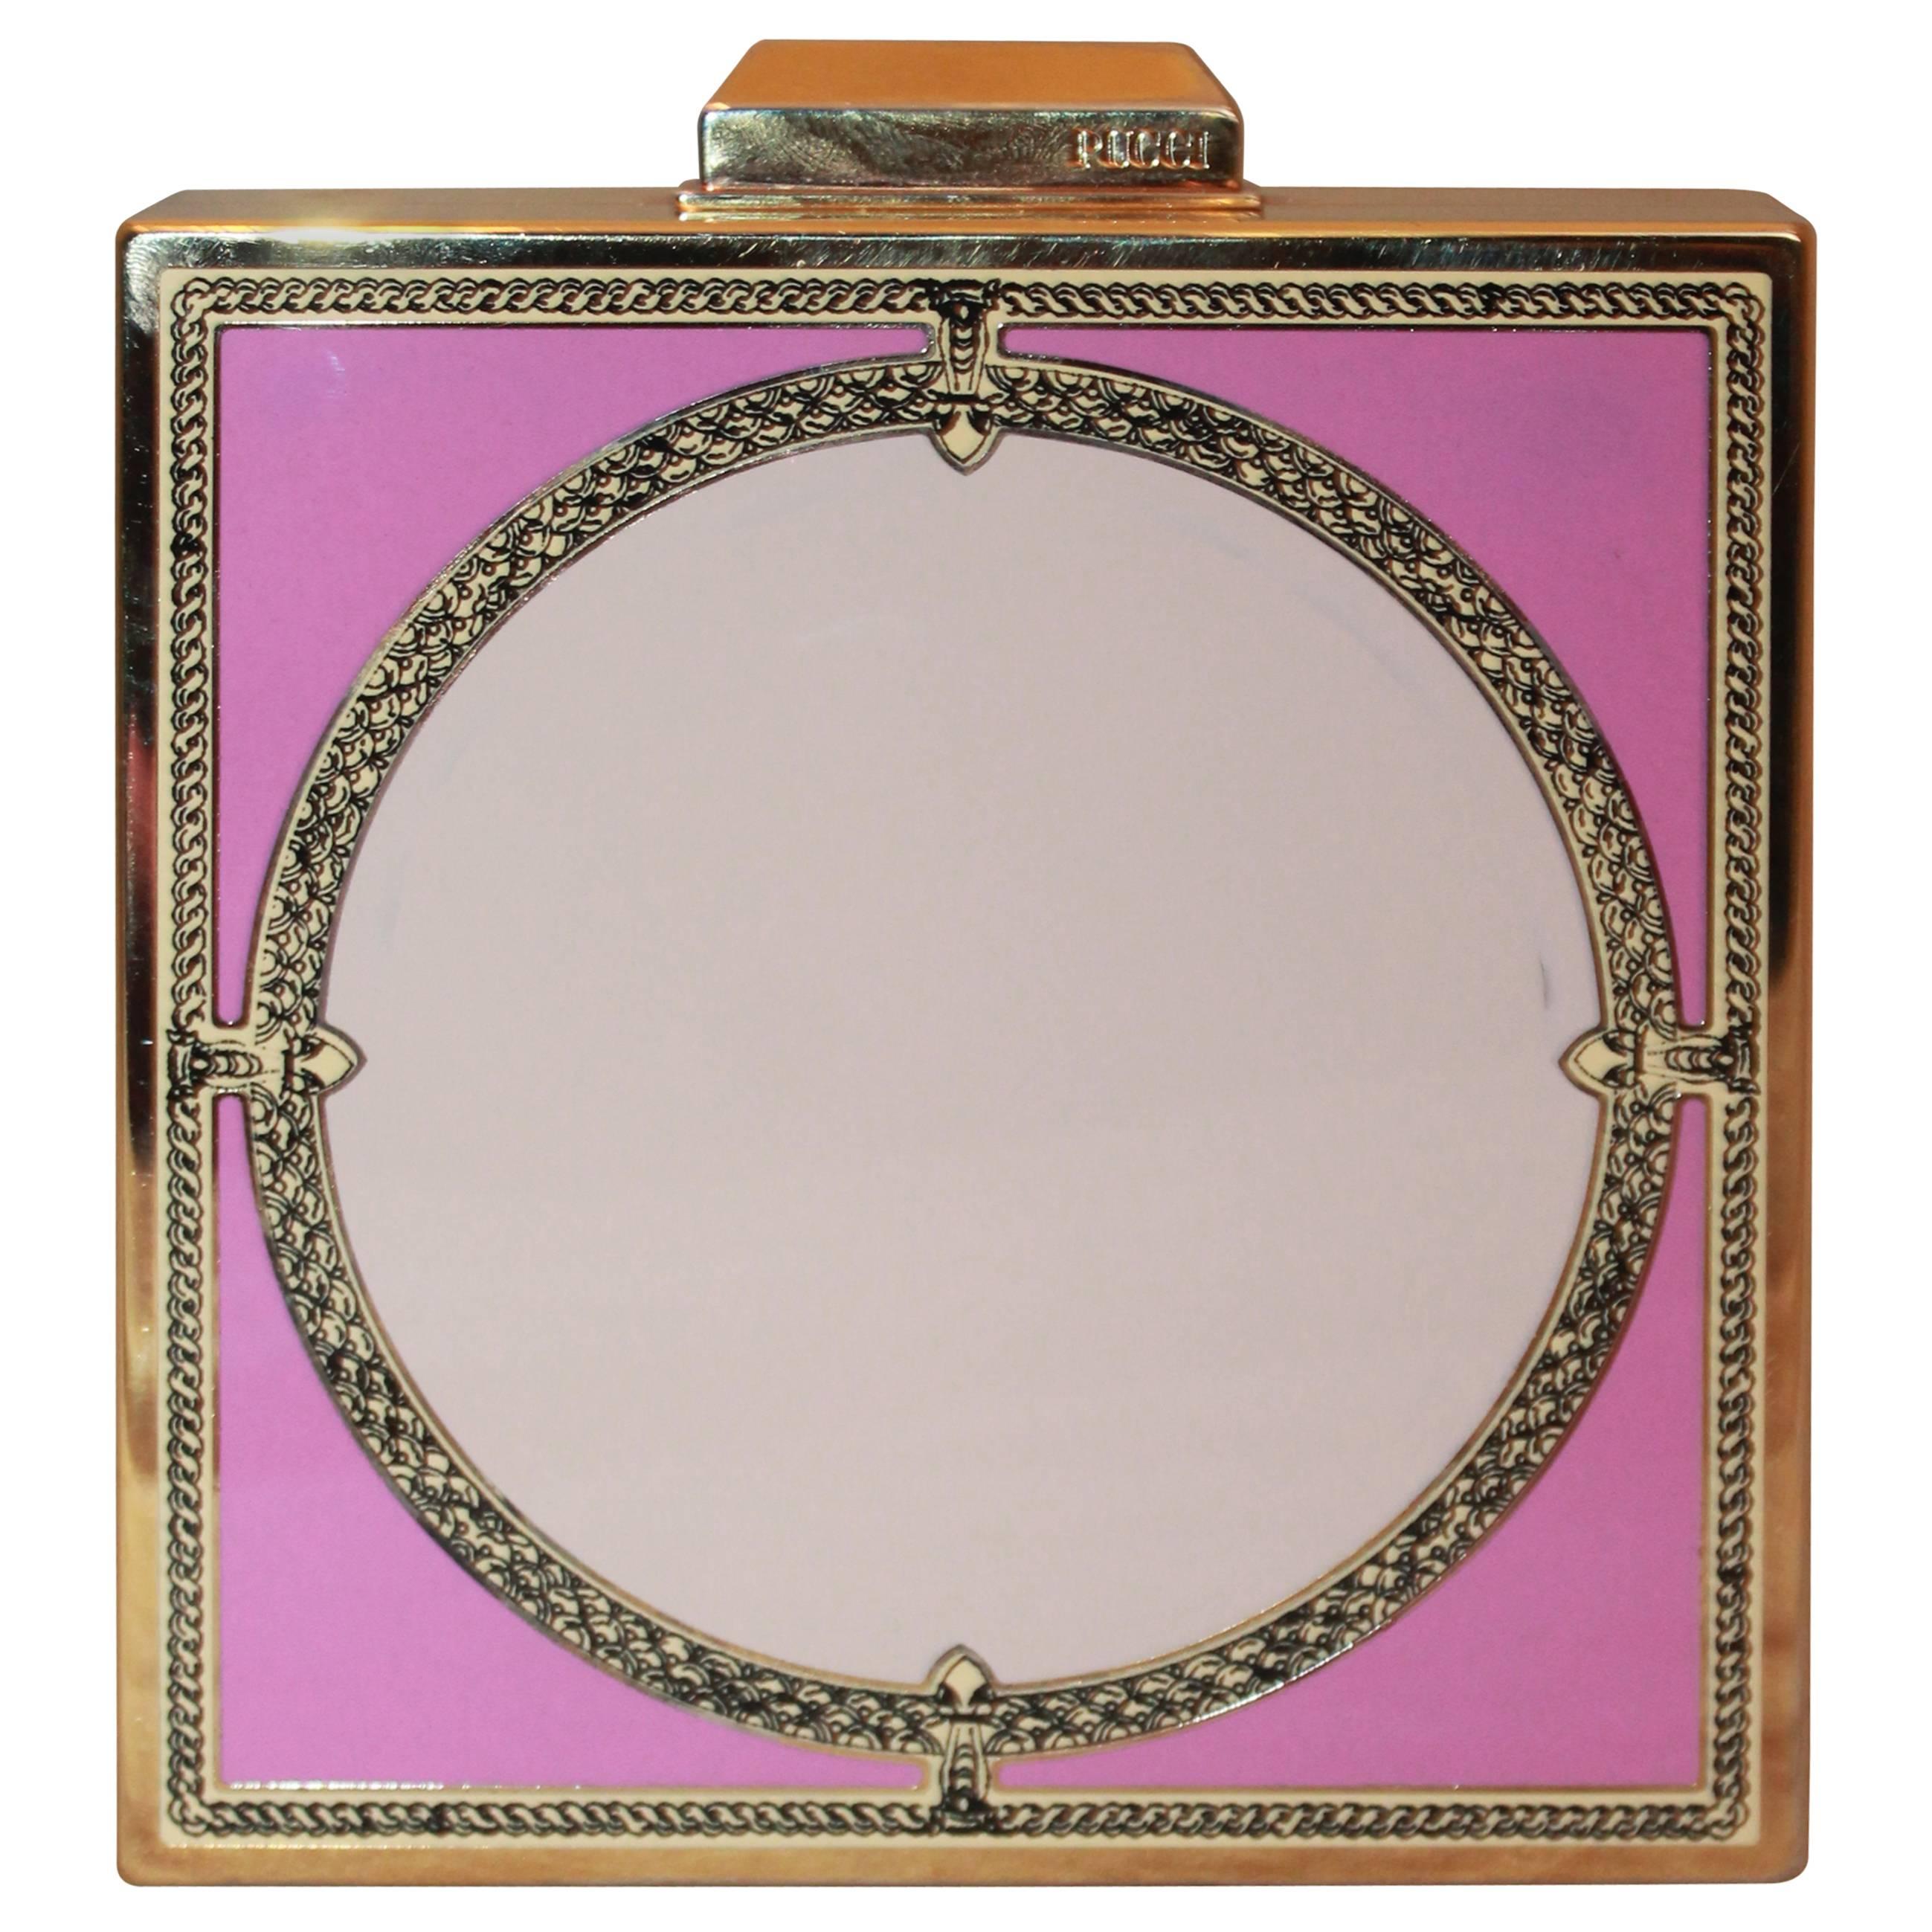 Emilio Pucci Gold Clutch with Pink Enamel Design 